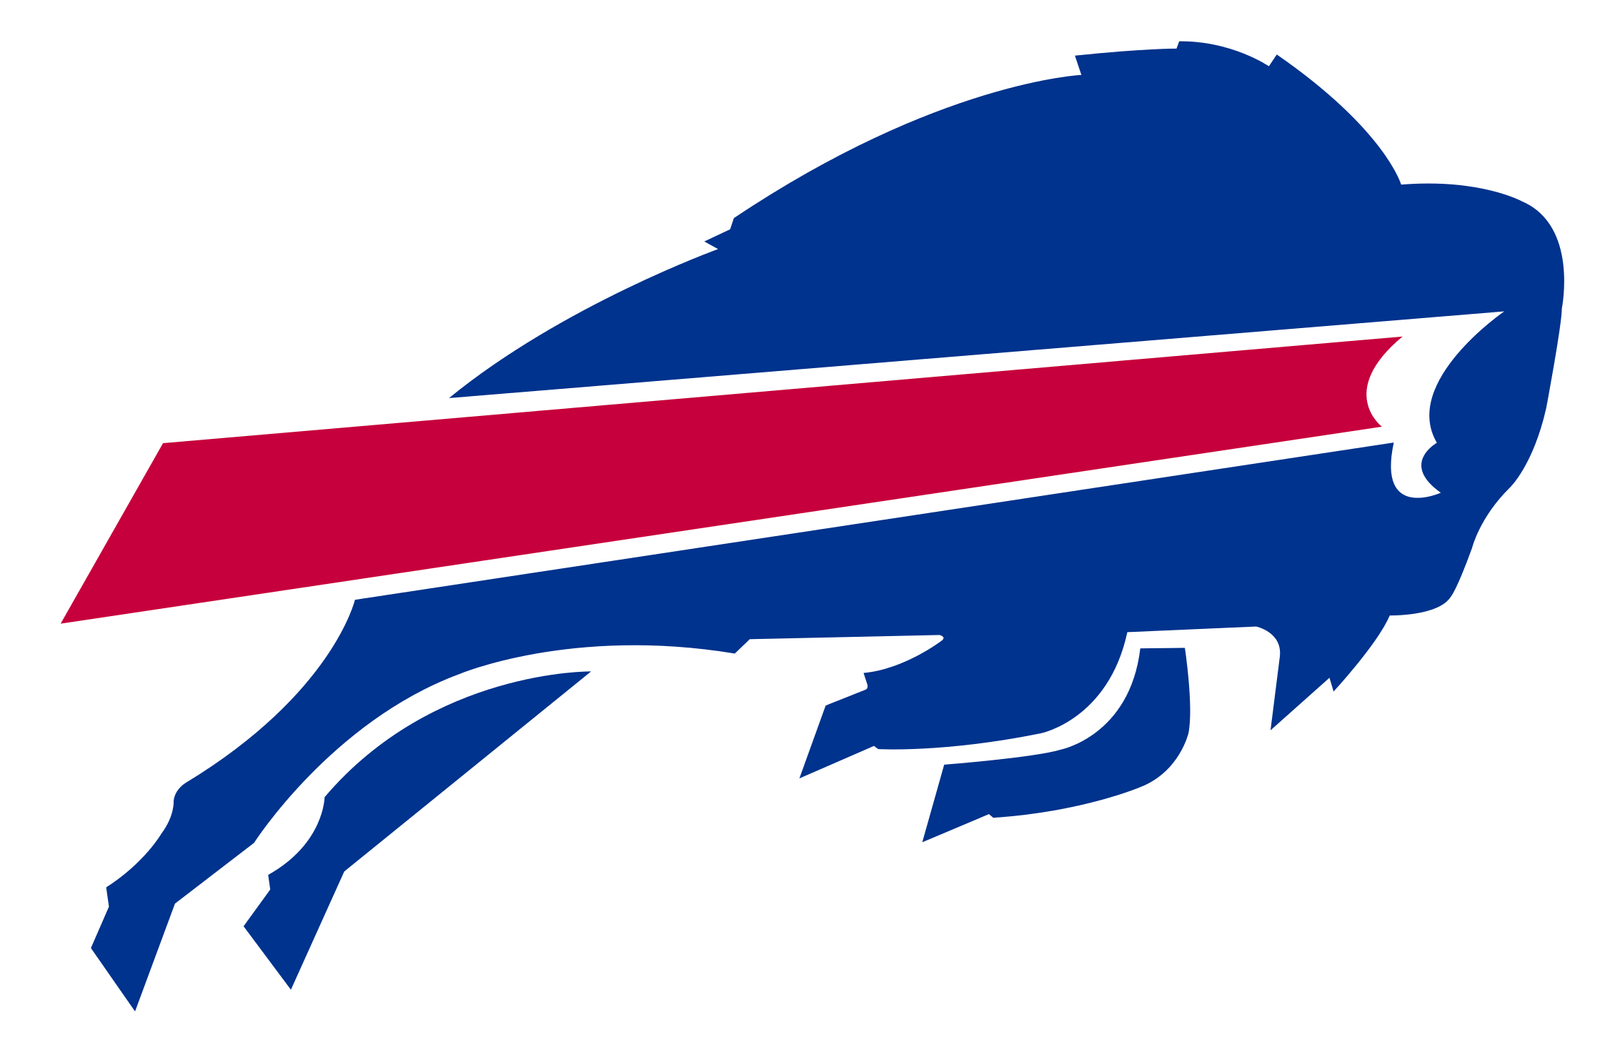 Buffalo bills logo and the history behind the team